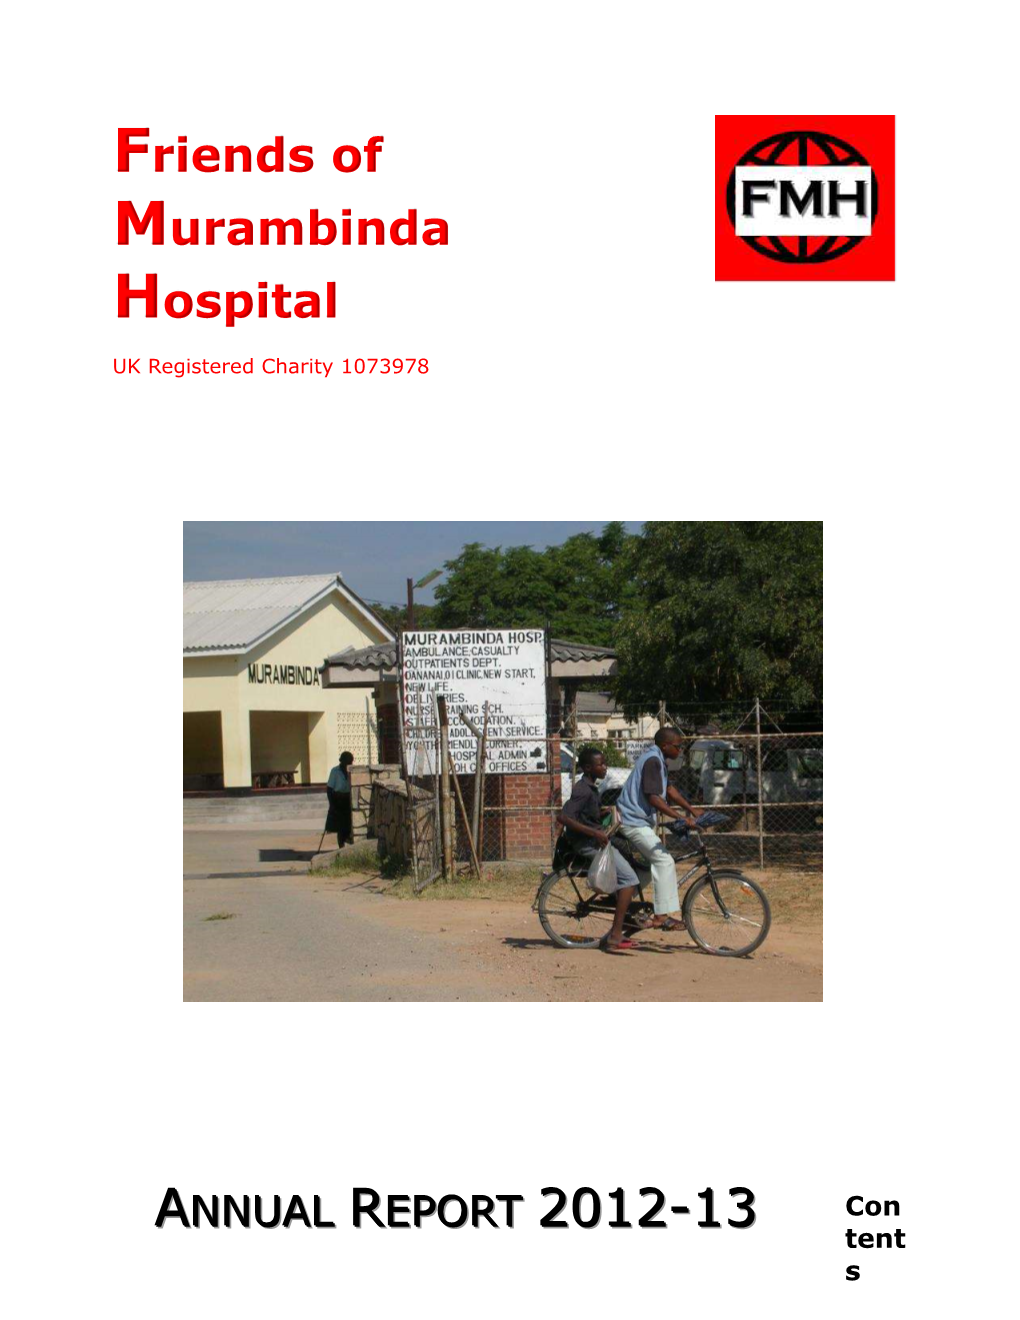 Friends of Murambinda Hospital (Reg